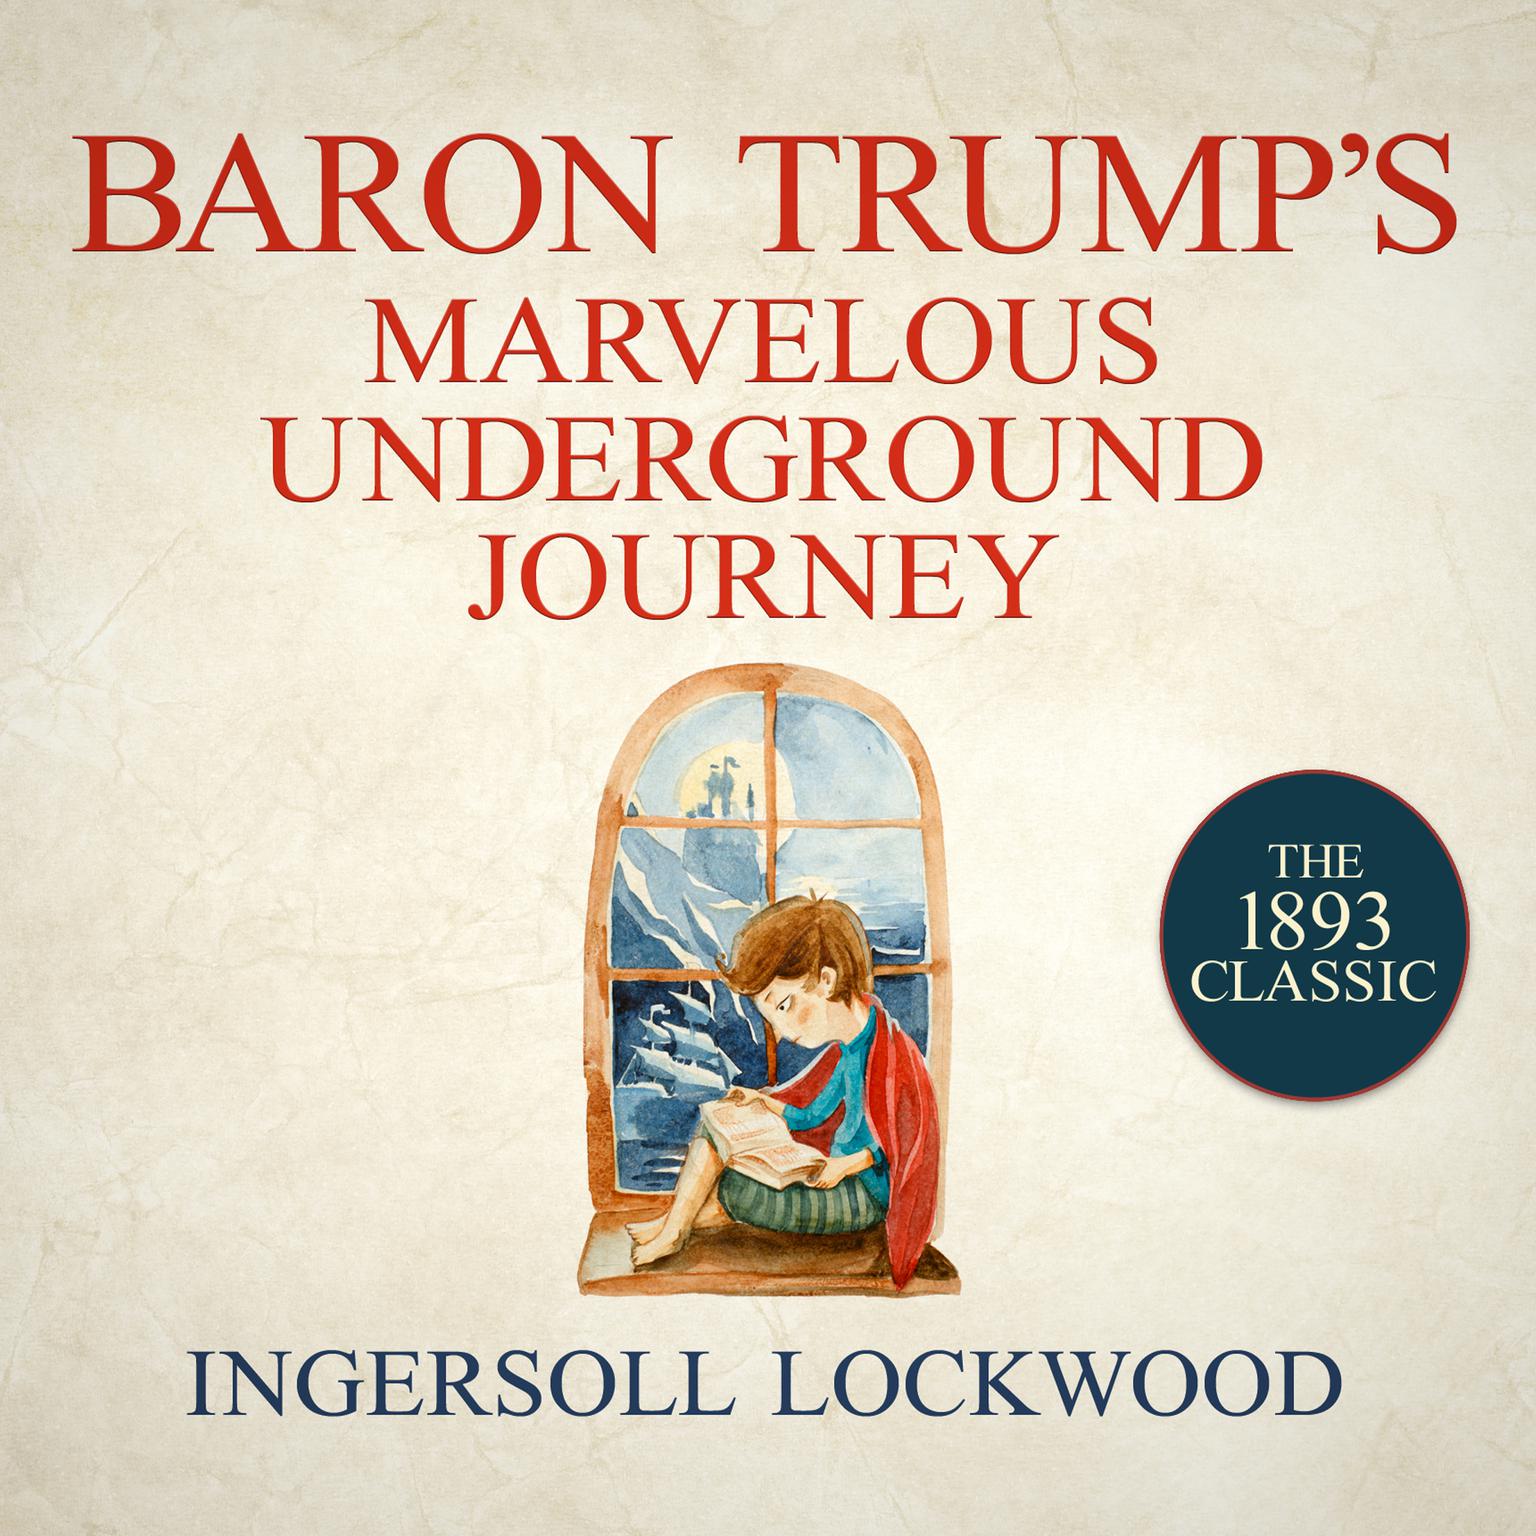 Baron Trumps Marvelous Underground Journey Audiobook, by Ingersoll Lockwood